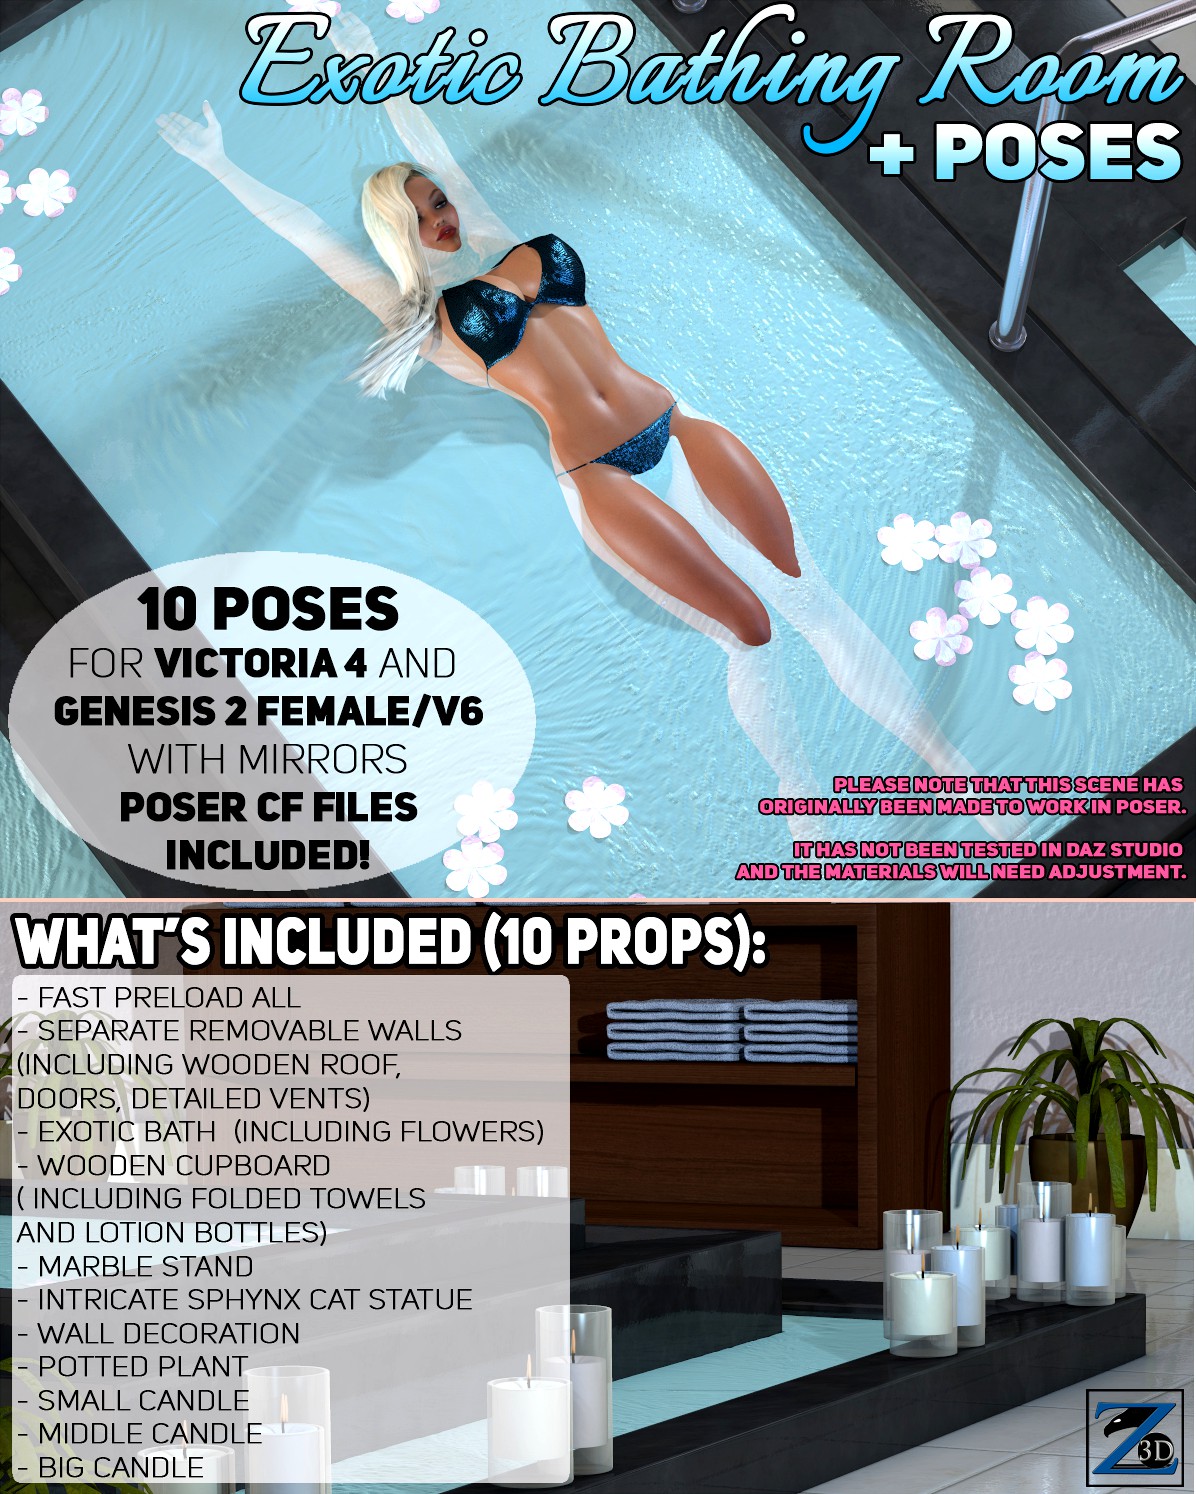 Z Exotic Bathing Room + Poses